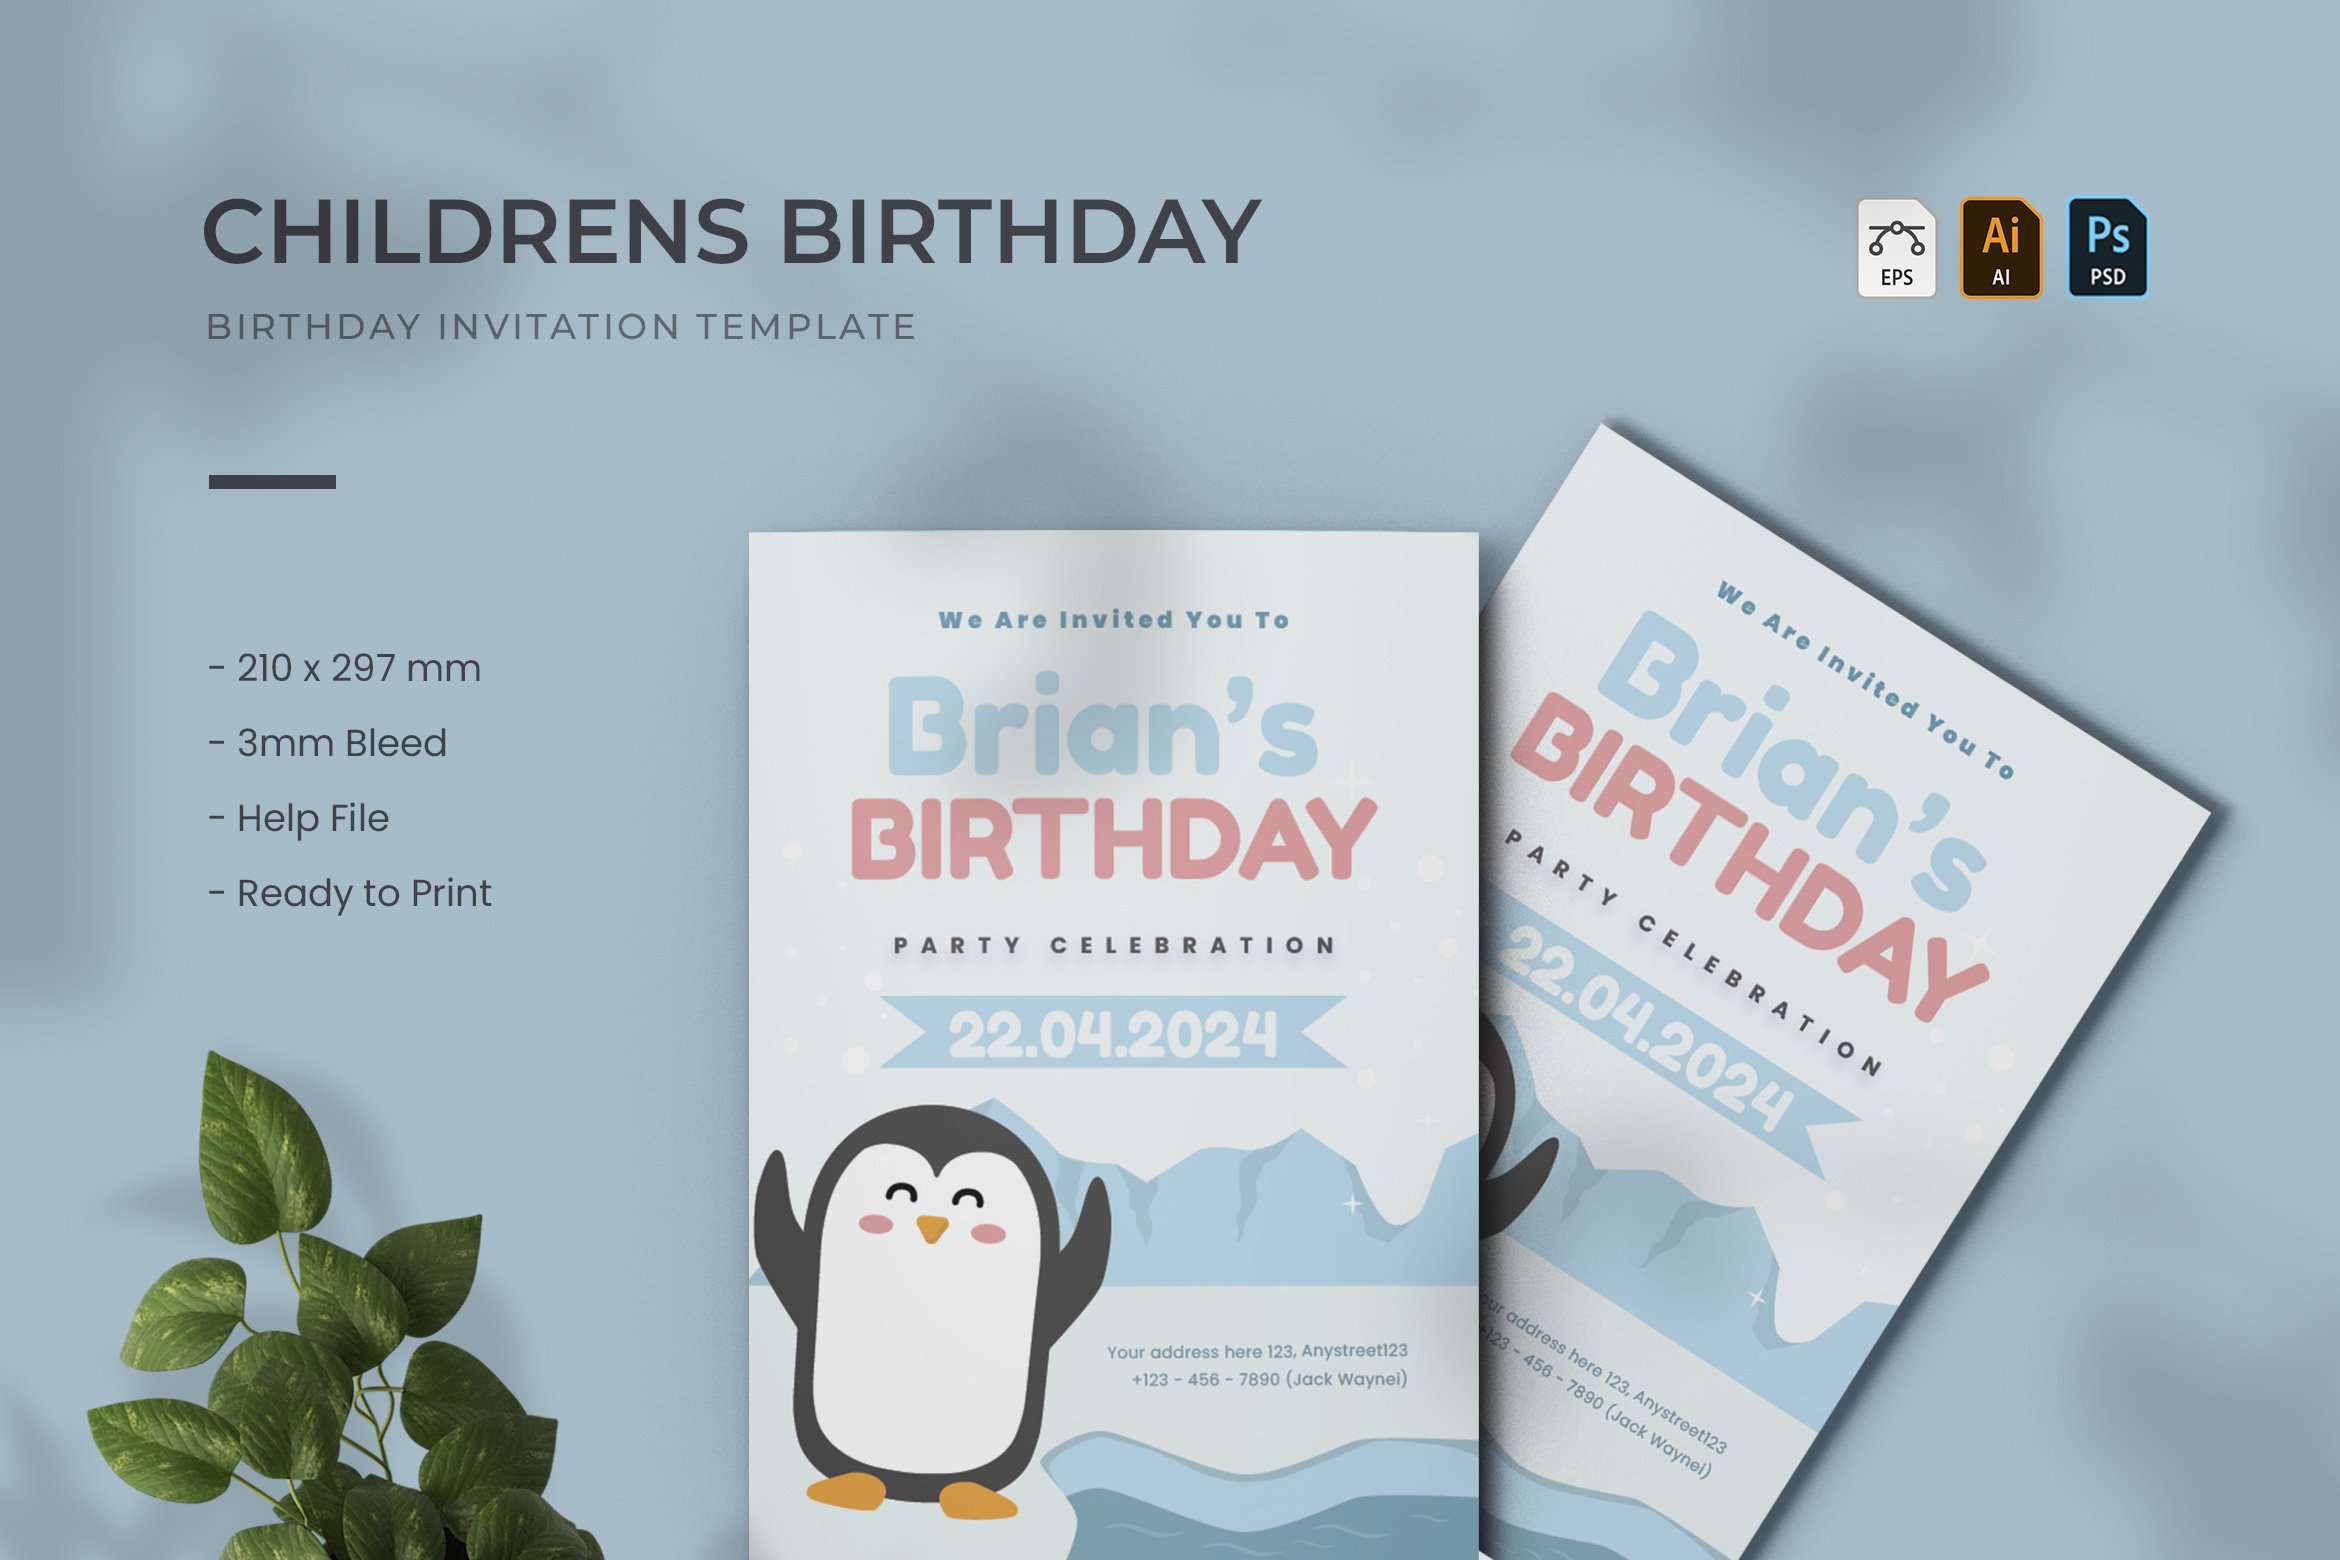 Childrens - Birthday Invitation cover image.